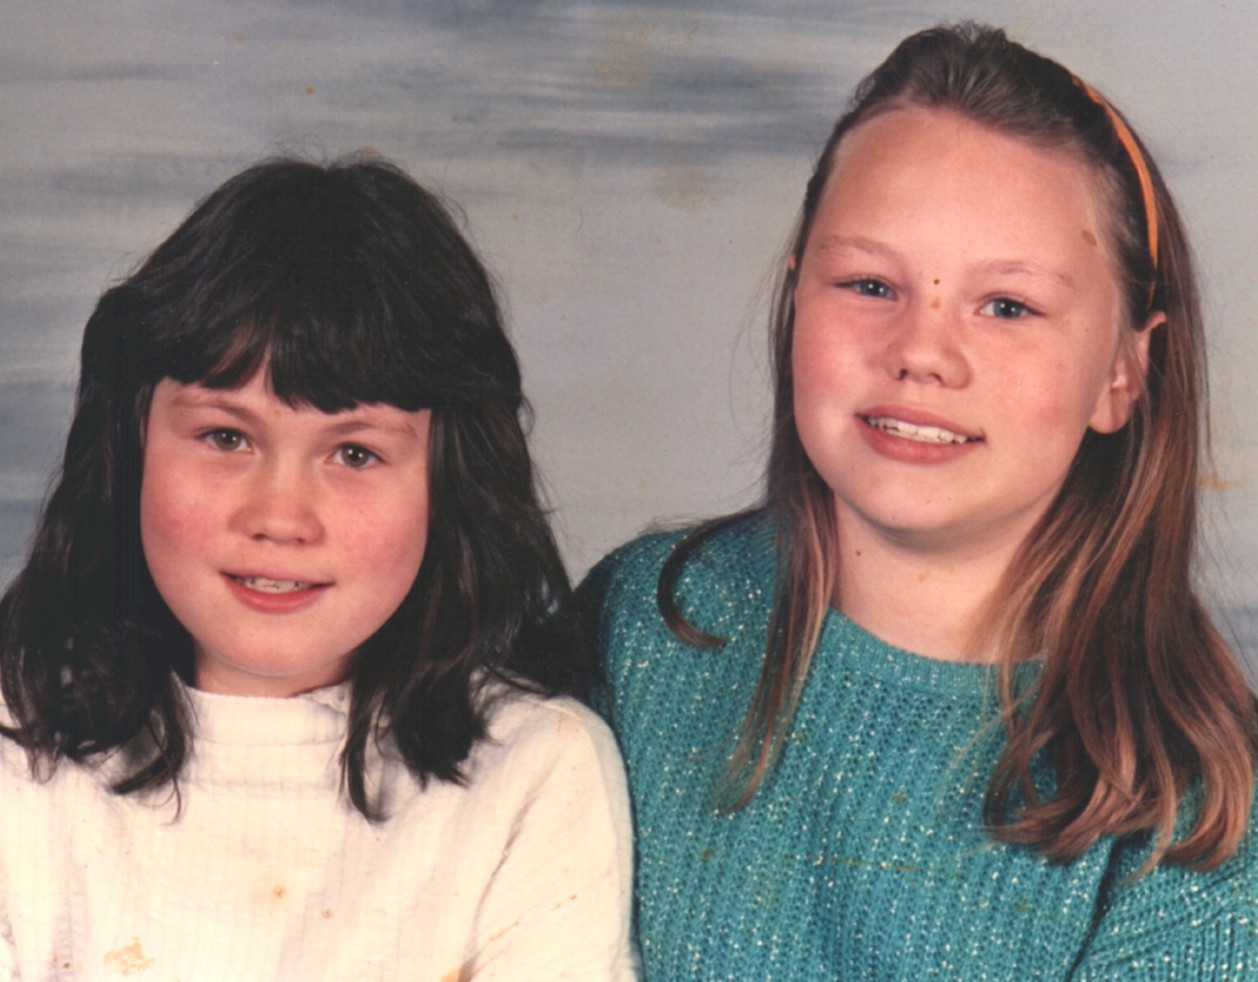 Amy Morse and Chloe Birnie as kids